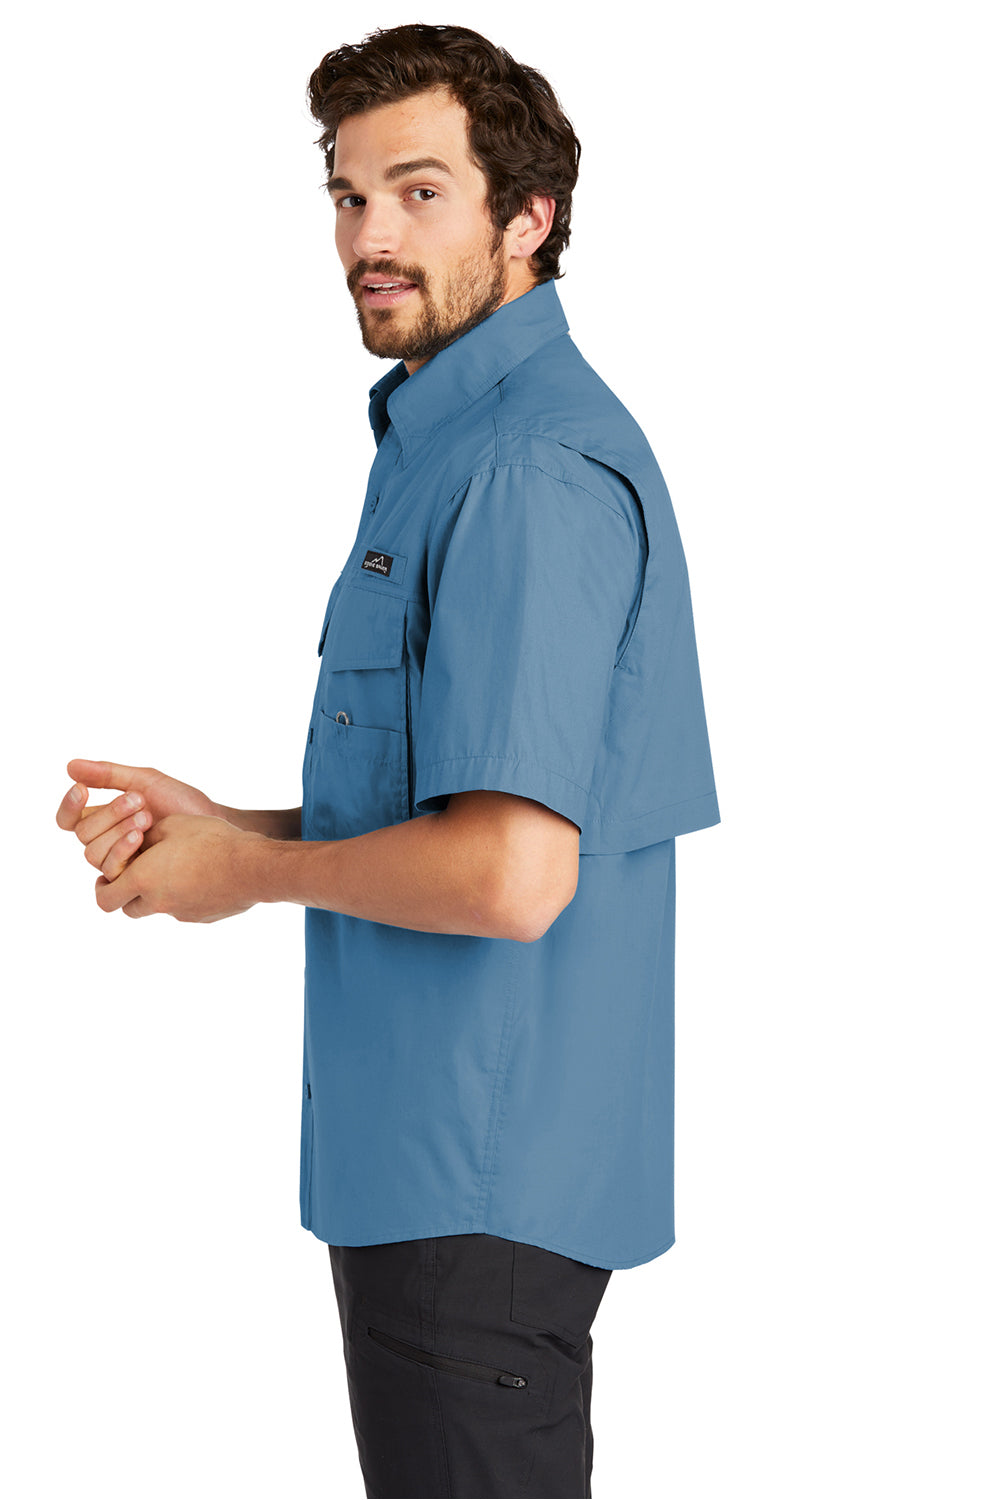 Eddie Bauer EB608 Mens Fishing Short Sleeve Button Down Shirt w/ Double Pockets Blue Gill Model Side